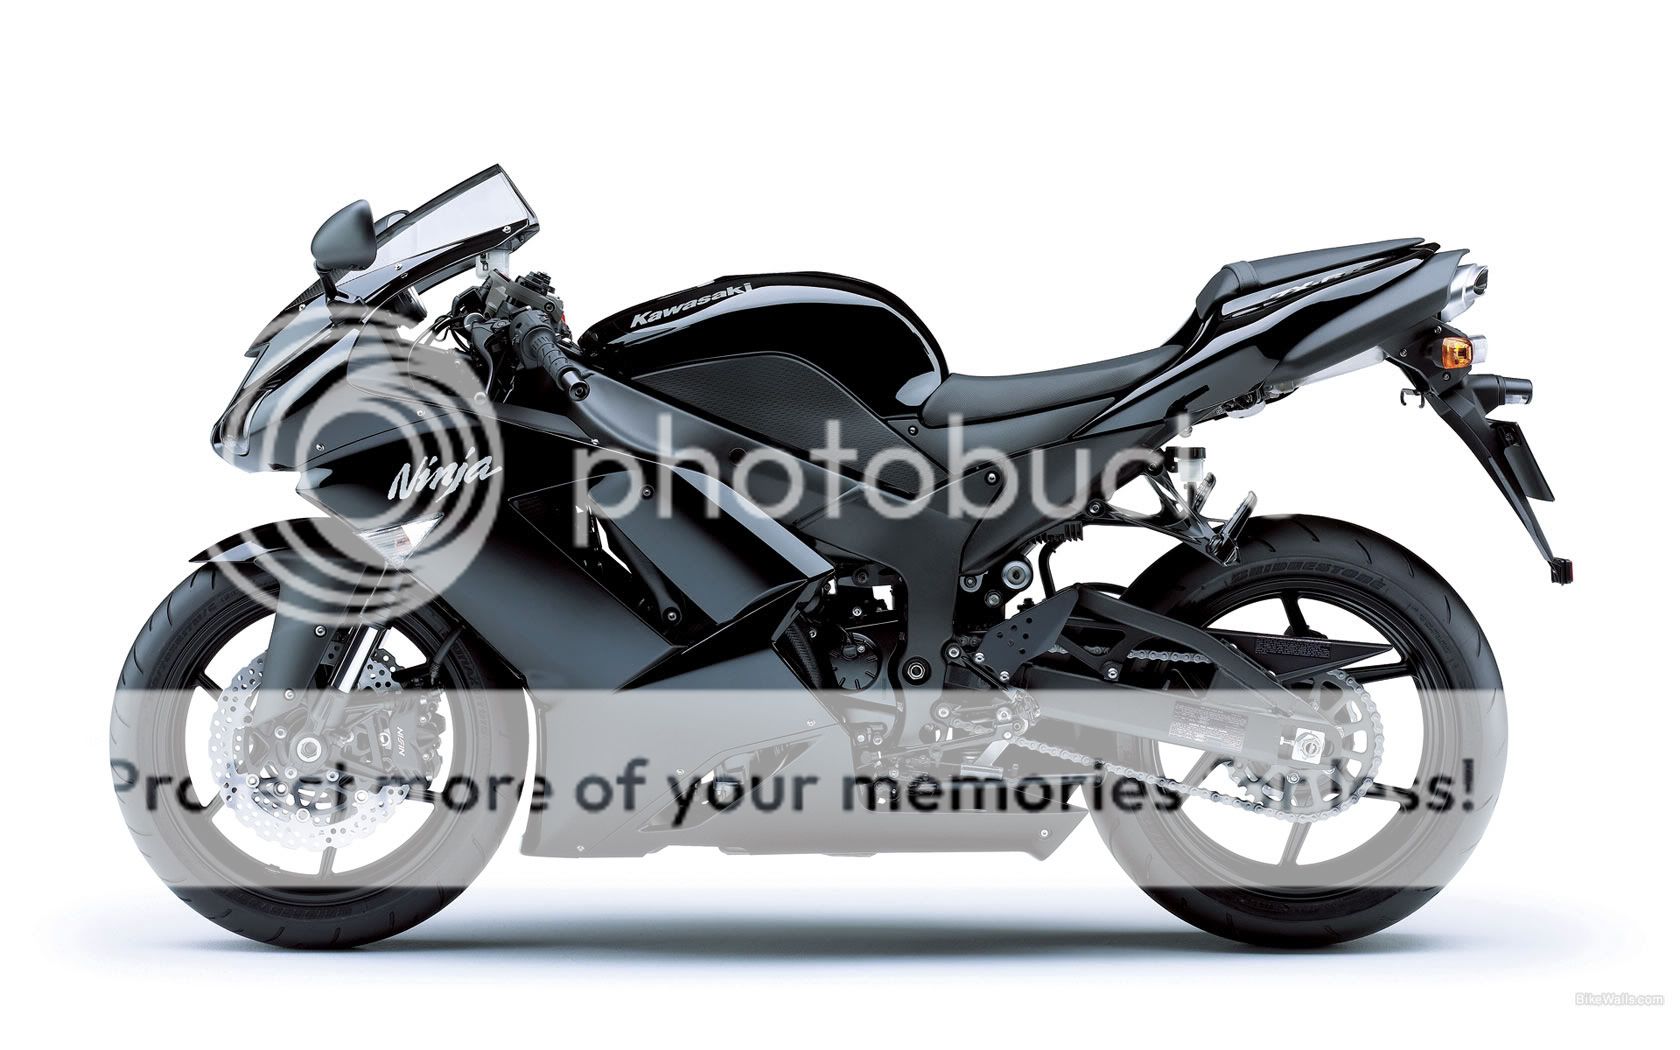 http://i561.photobucket.com/albums/ss52/john_abrh/JOHN/Motorcycles/Kawasaki_Ninja_ZX-6R_2008_15_1680x1.jpg